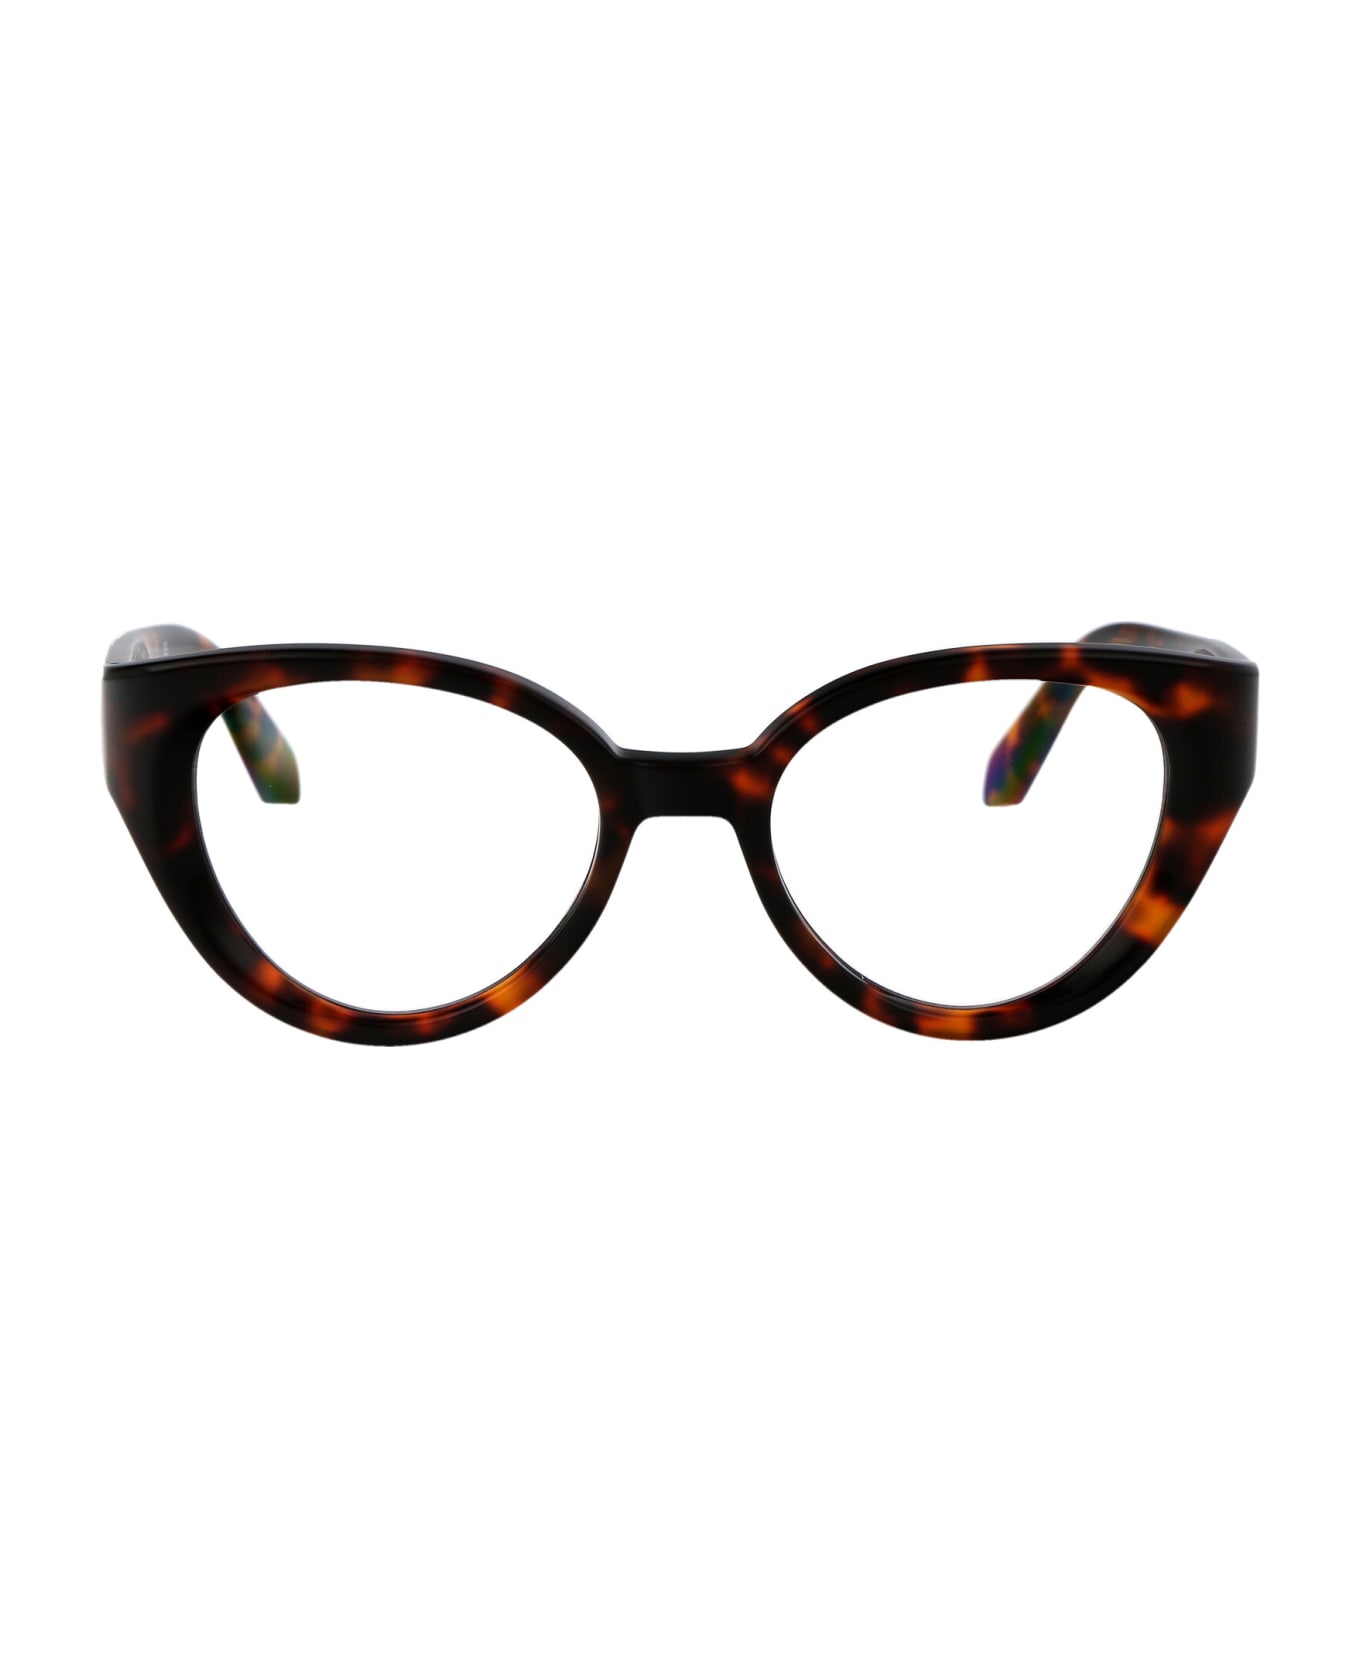 Off-White Optical Style 62 Glasses - 6000 HAVANA アイウェア